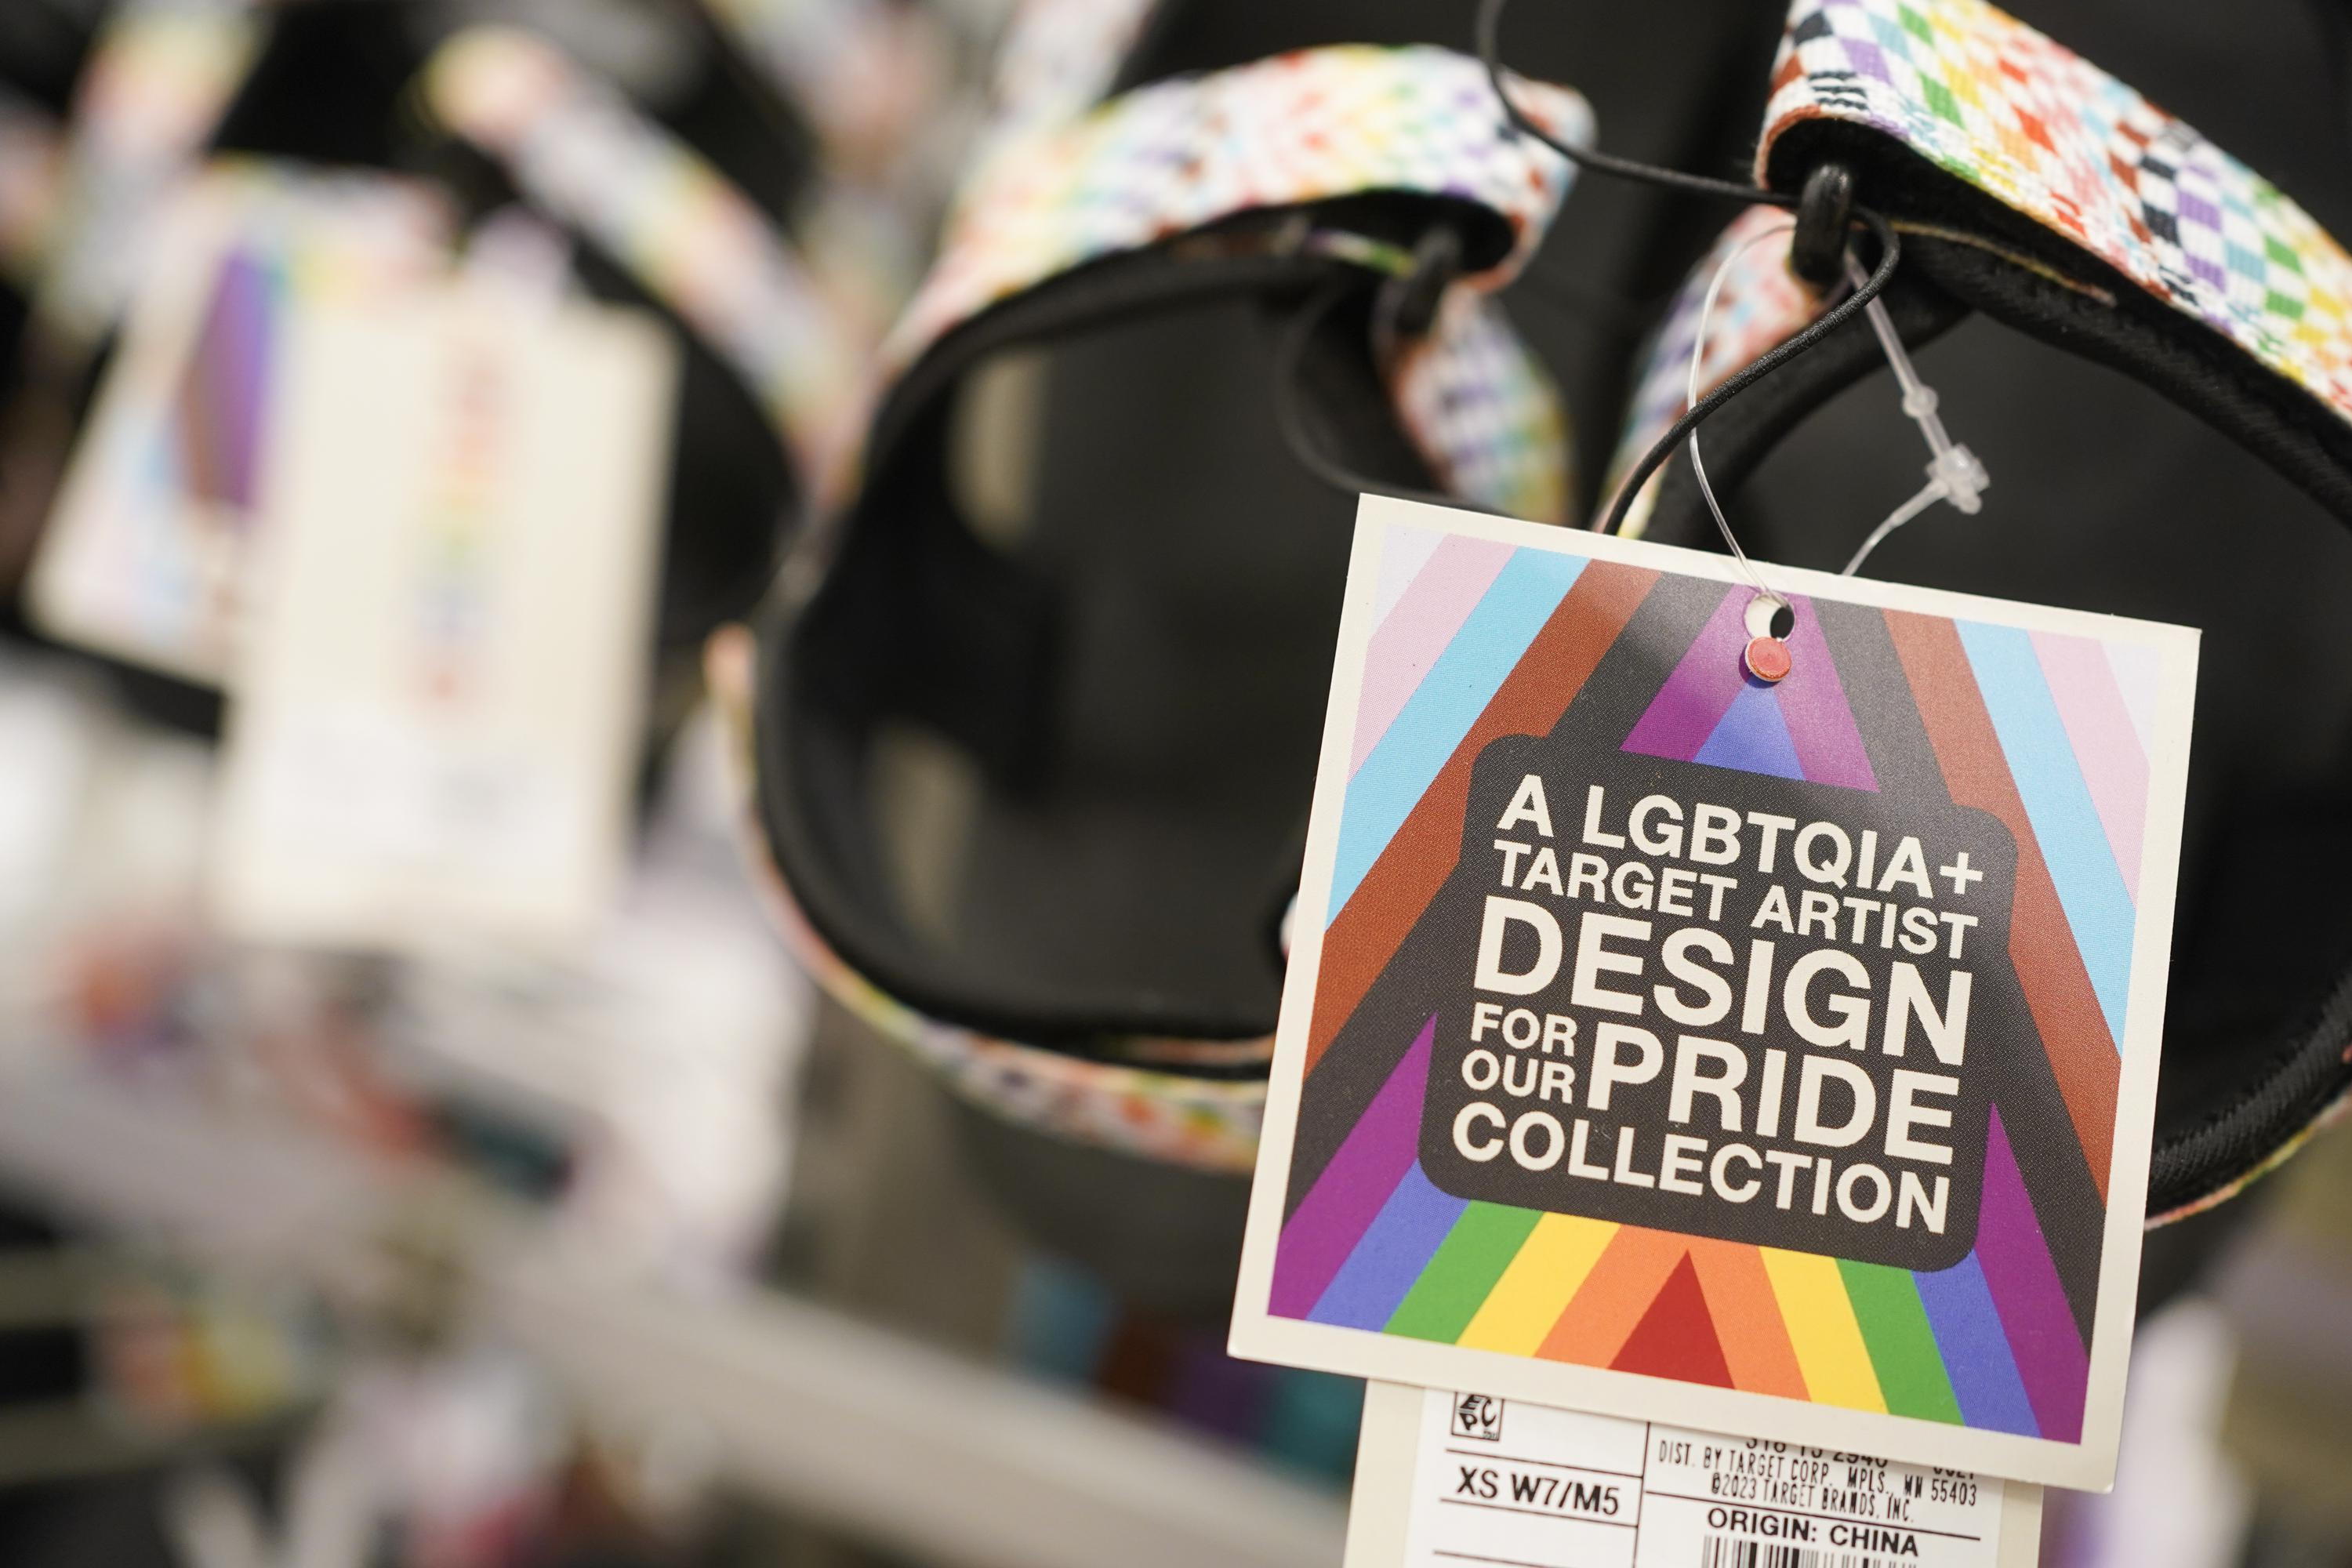 UK designer's satanic apparel not part of Target's Pride collection